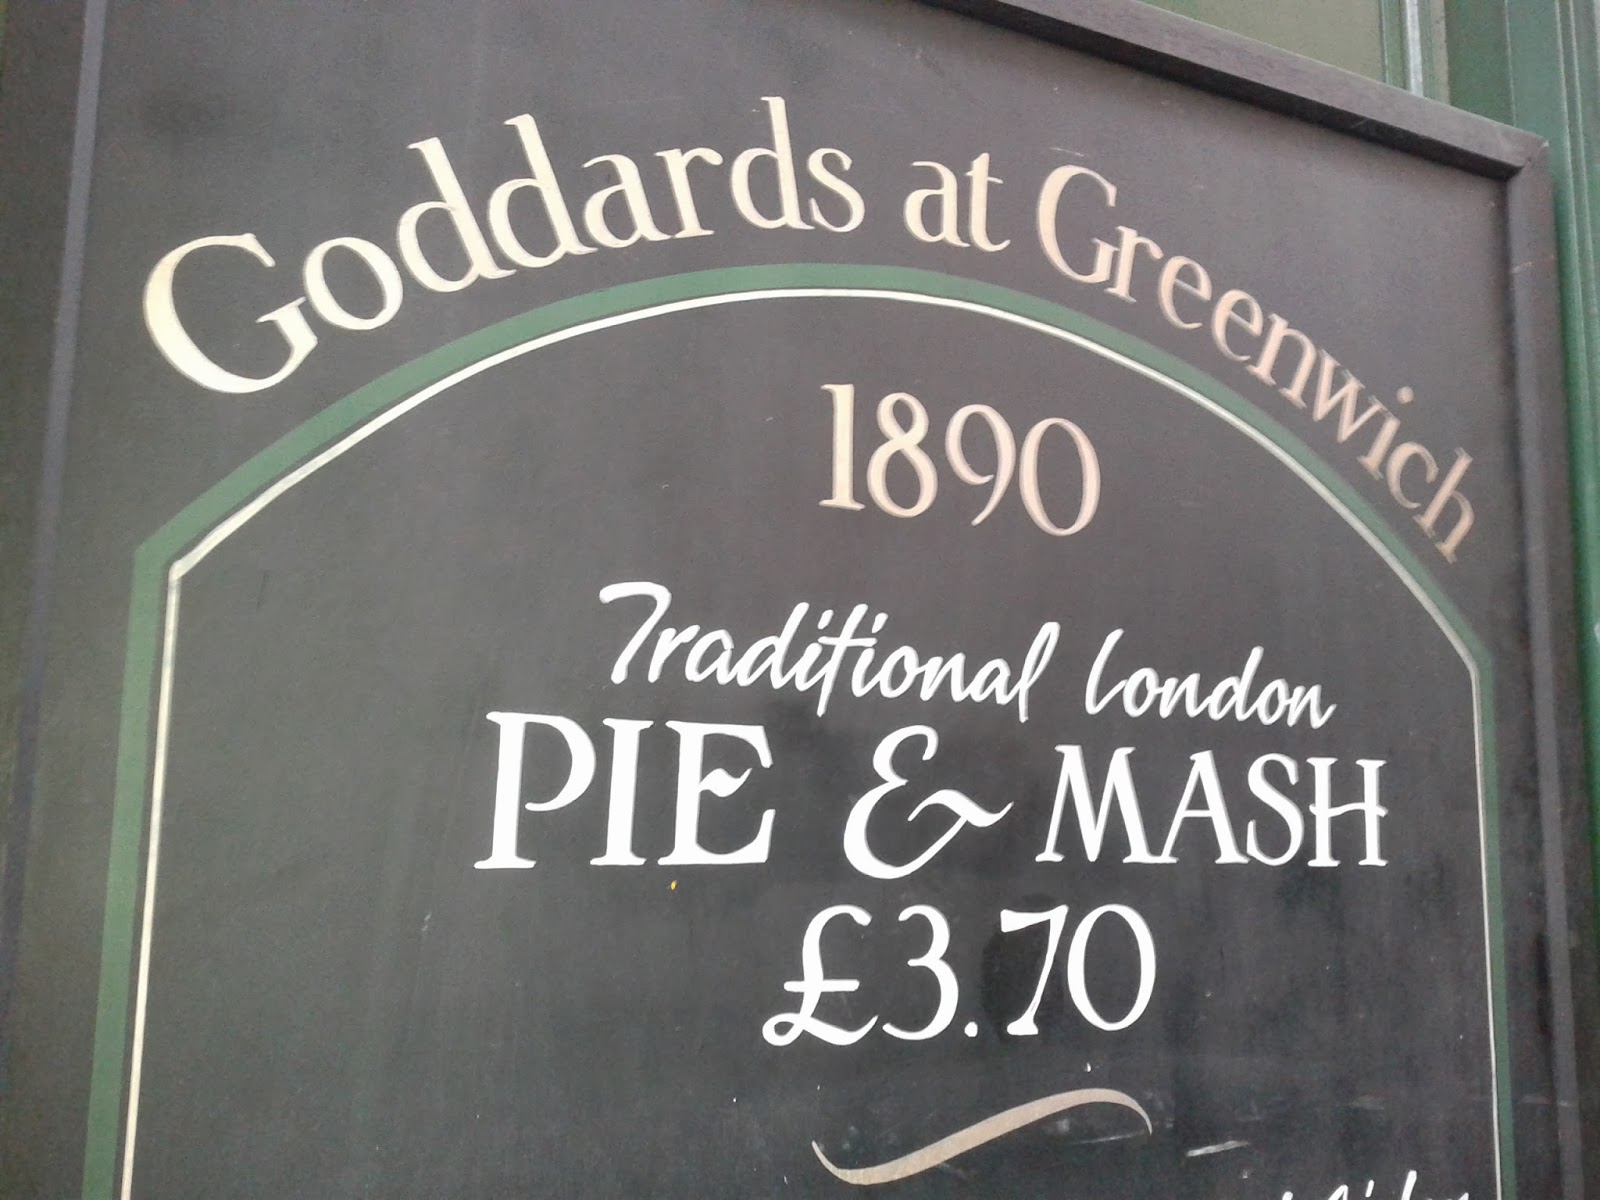 Goddard at Greenwich pie and mash